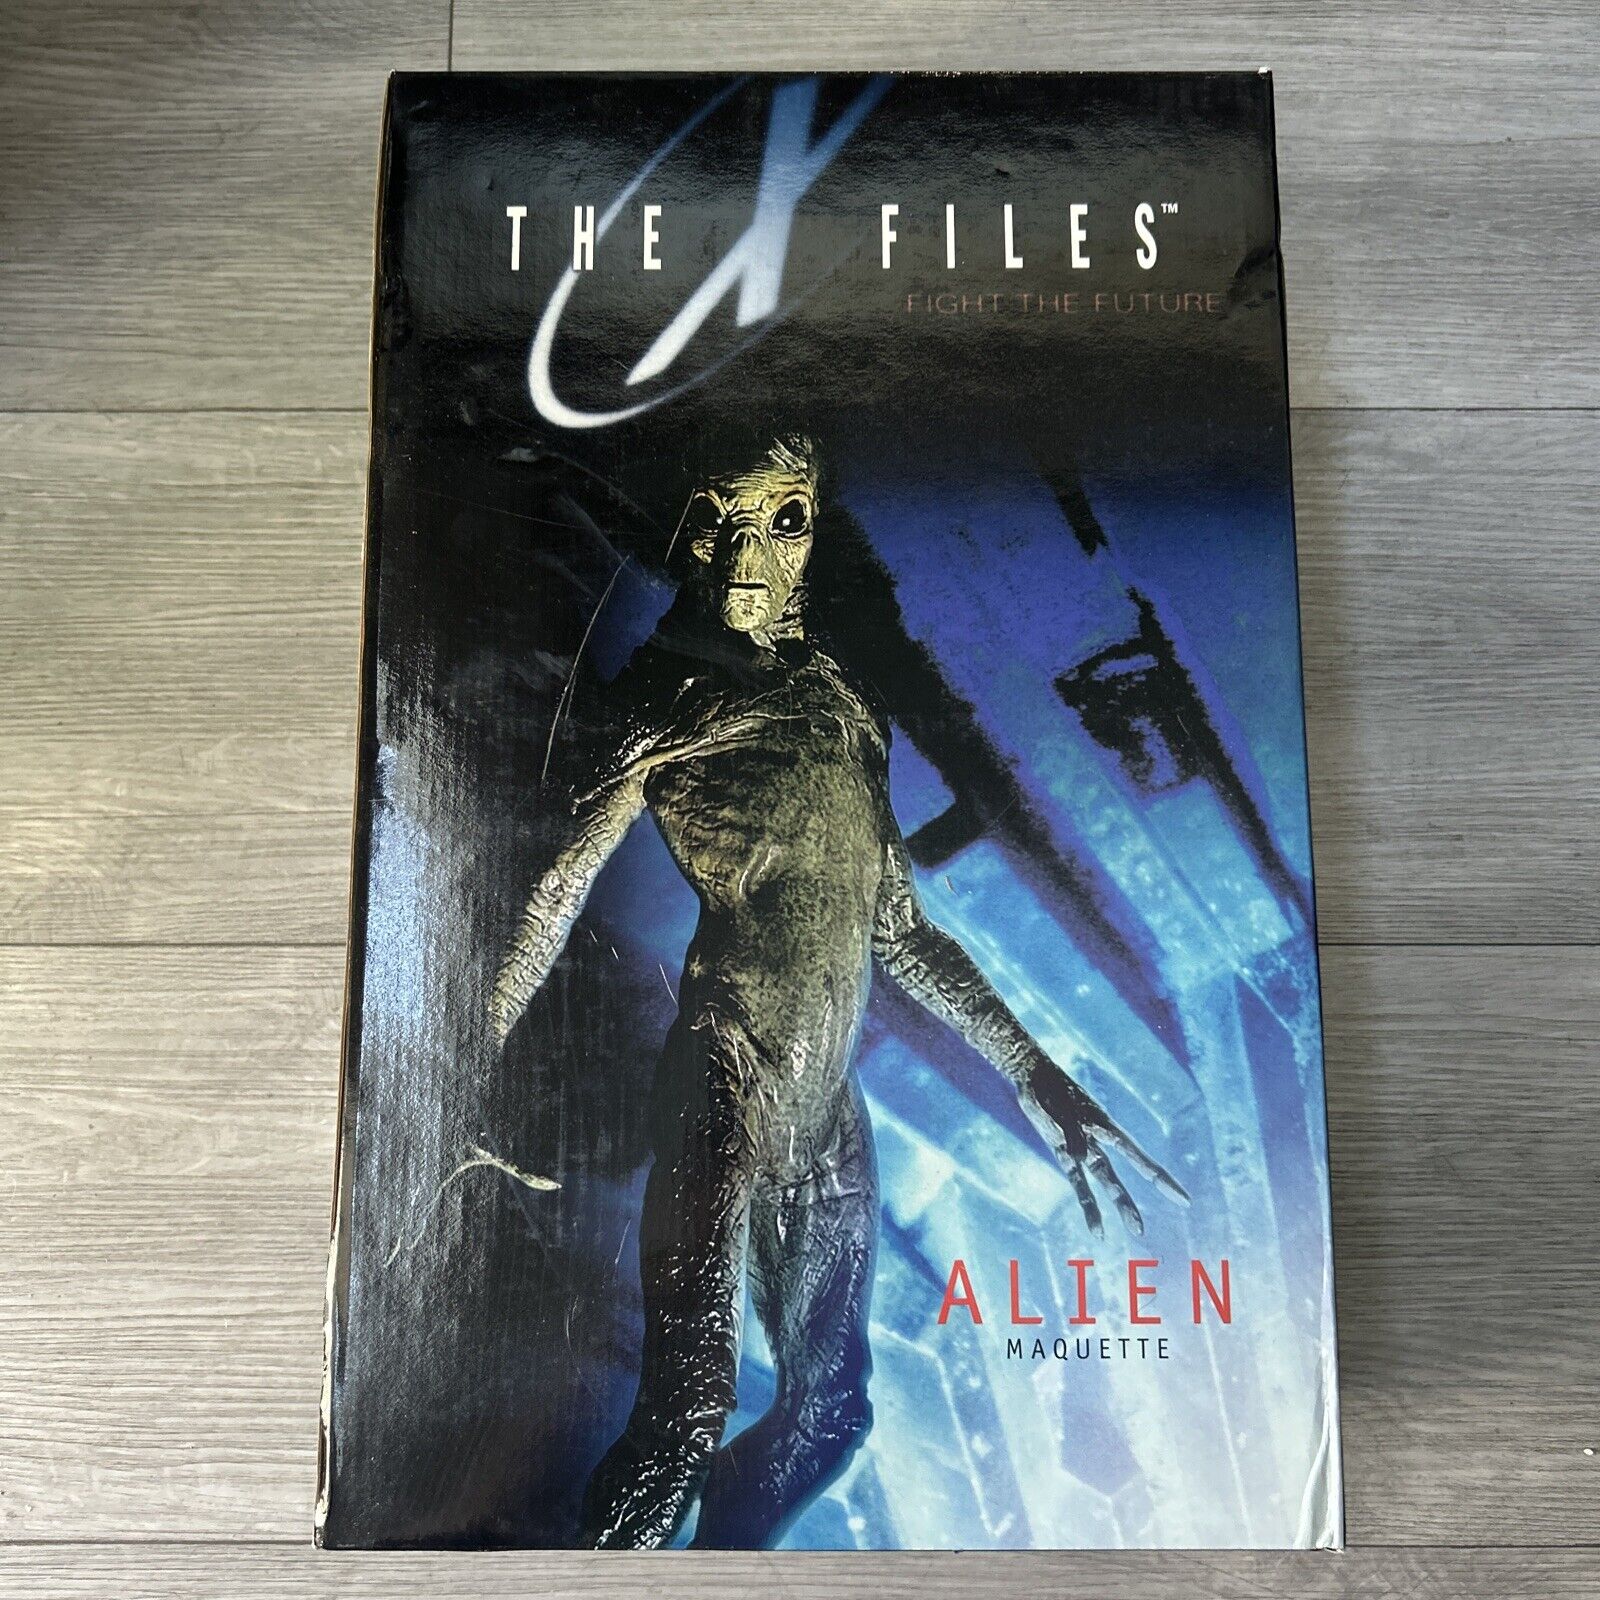 Rare Vintage 98 Reel Images X-Files Alien Maquette Limited Edition /25,000